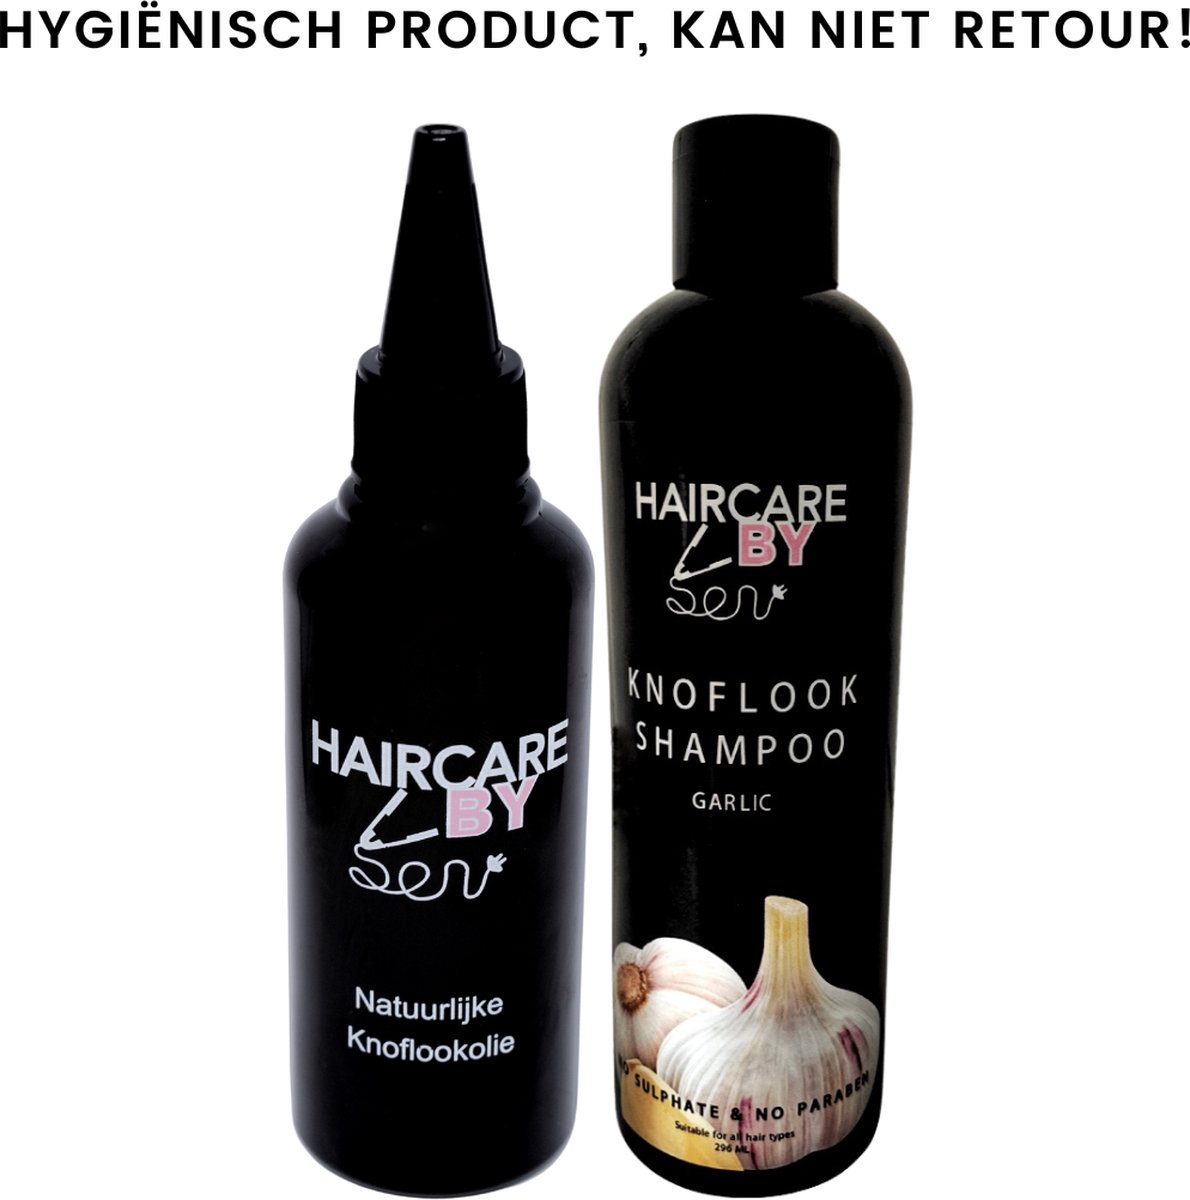 COMBIDEAL Natuurlijke Knoflookolie HaircarebySen 200ml + HaircarebySen knoflook shampoo